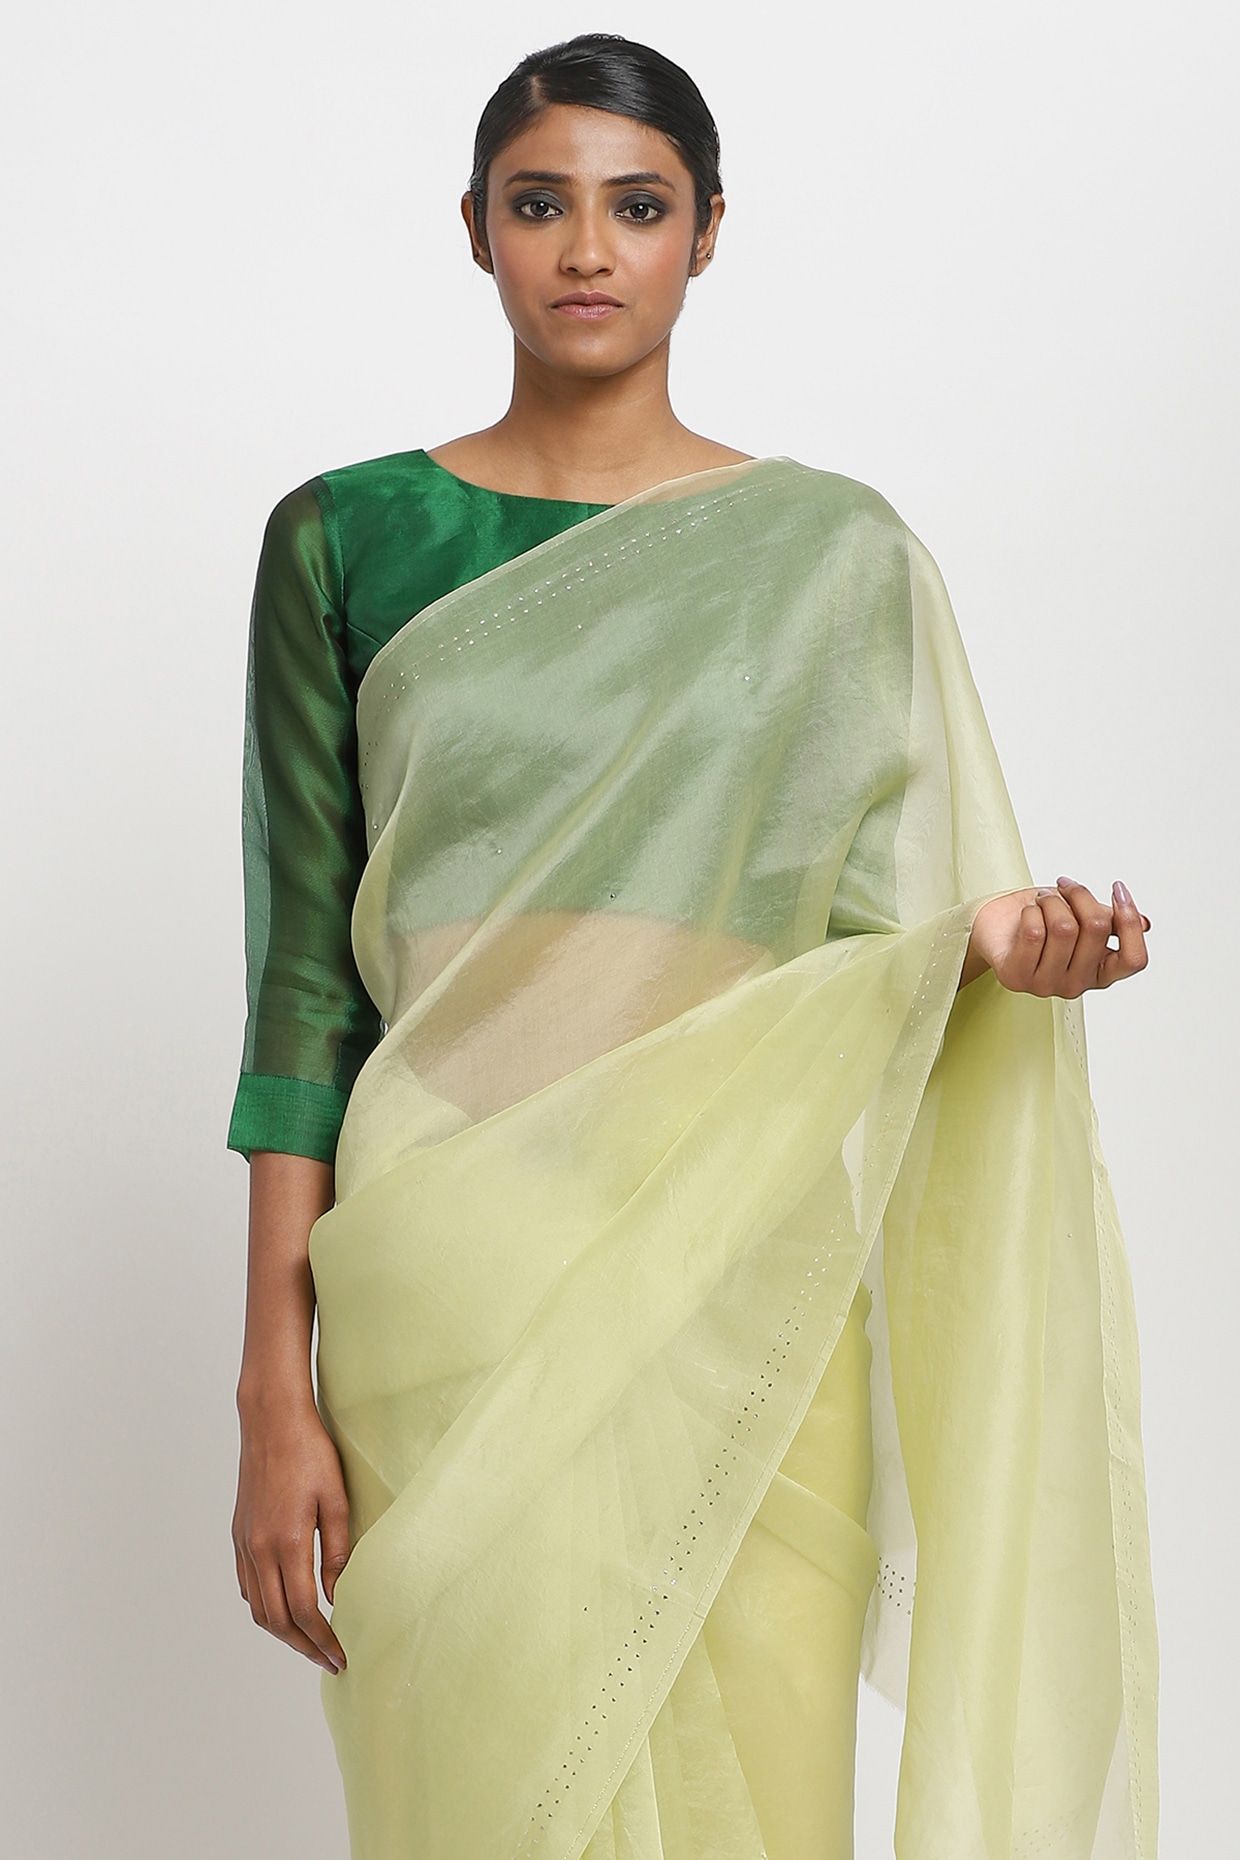 Surreal Green Colored Designer Saree, Bollywood Saree latest collections |  Bollywood Sarees